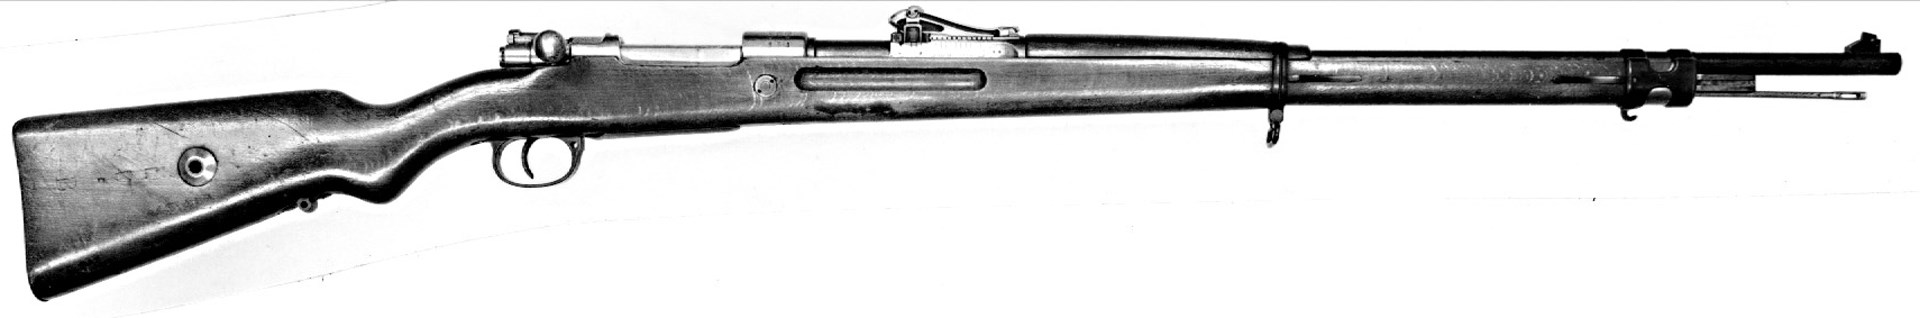 Right-side view bolt-action mauser rifle pre-war world war i black white vintage gun